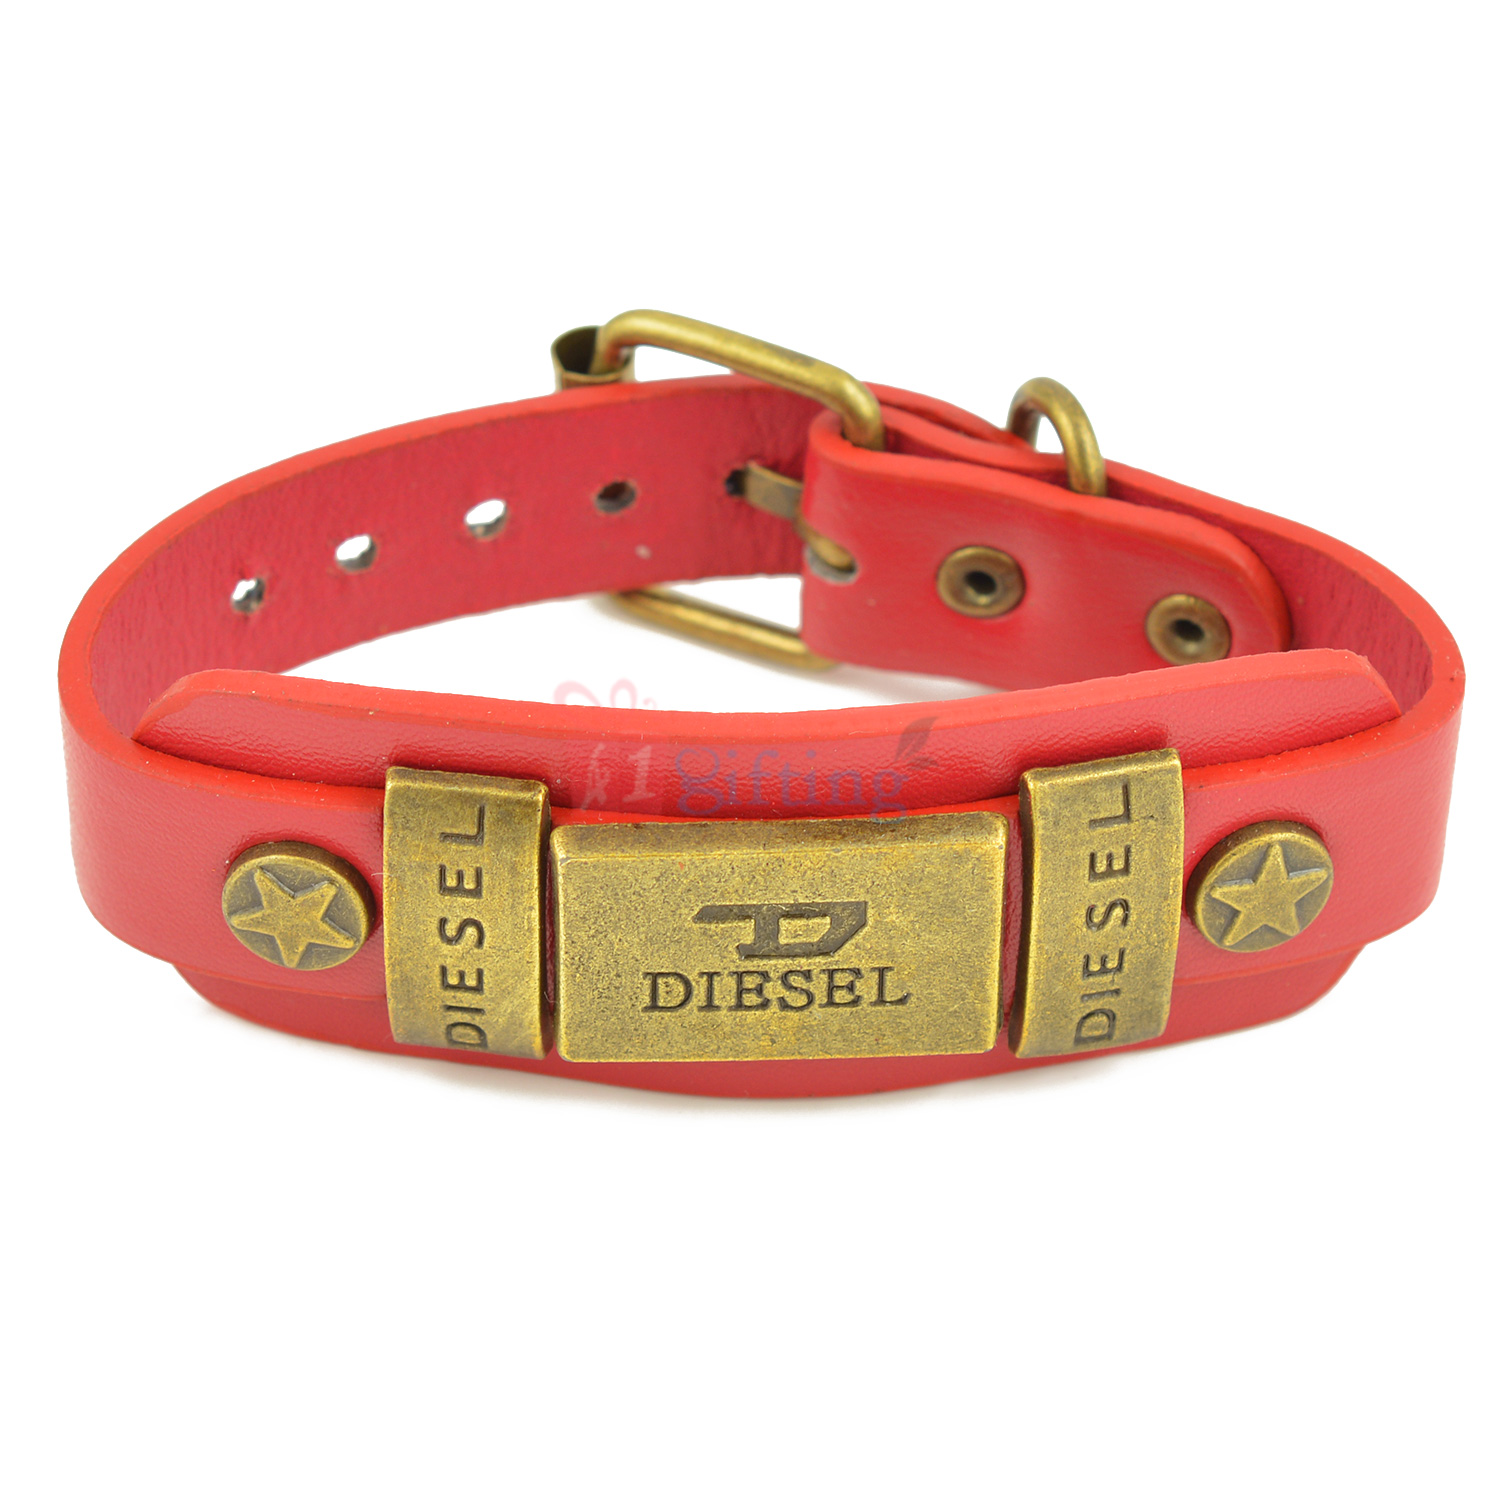 Diesel Durable Wrist Bracelet Band